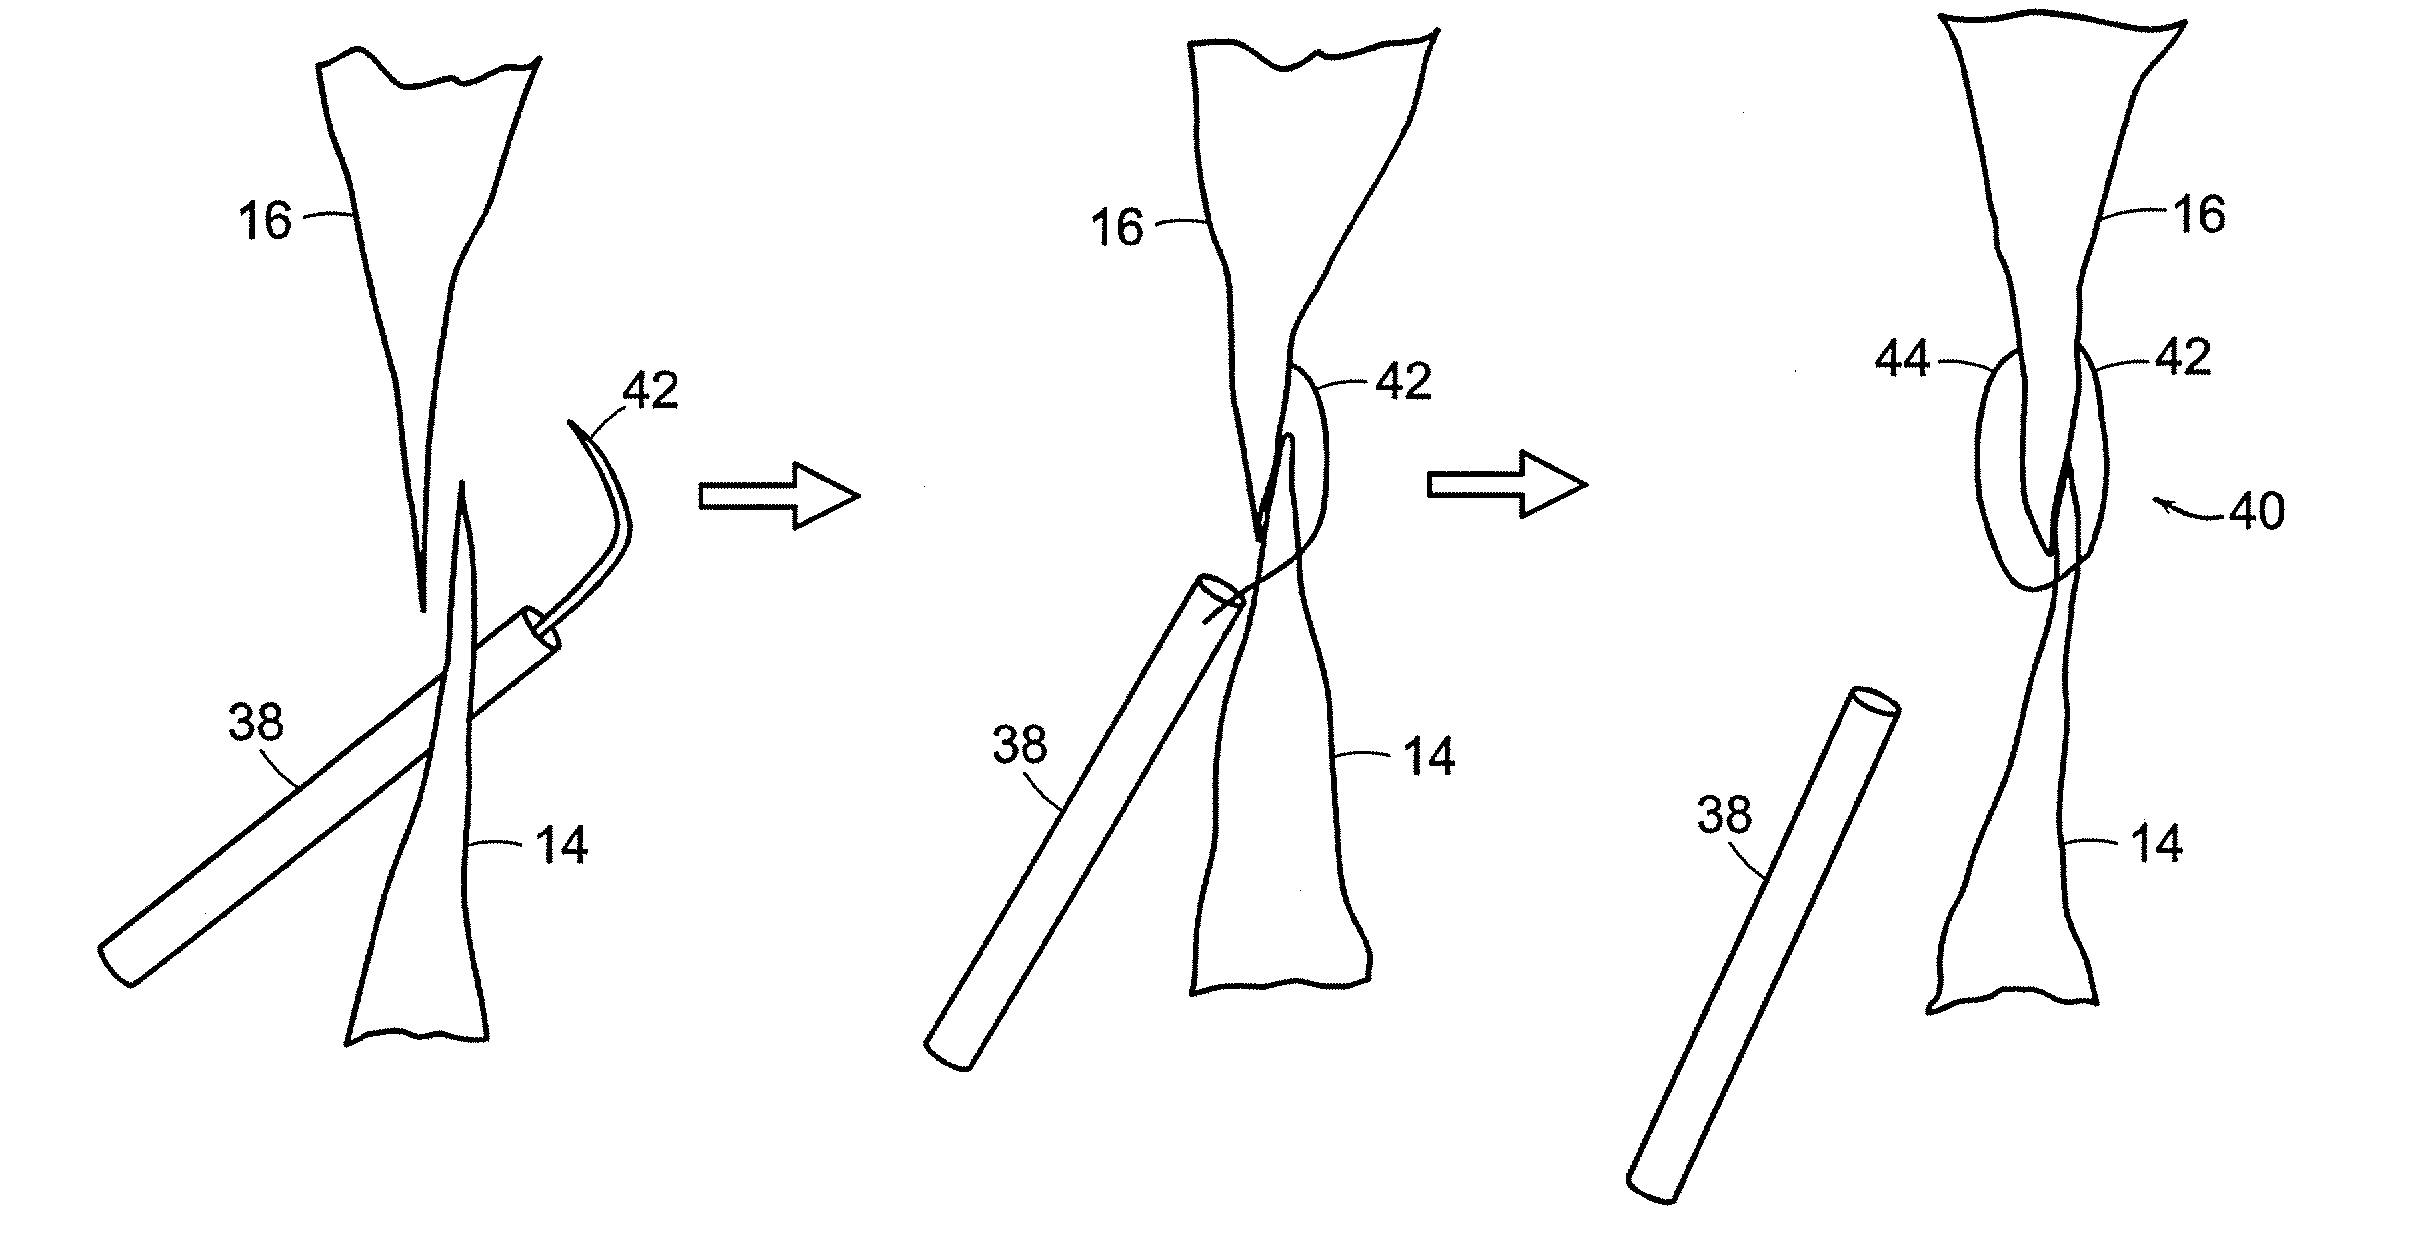 Patent foramen ovale (PFO) closure method and device